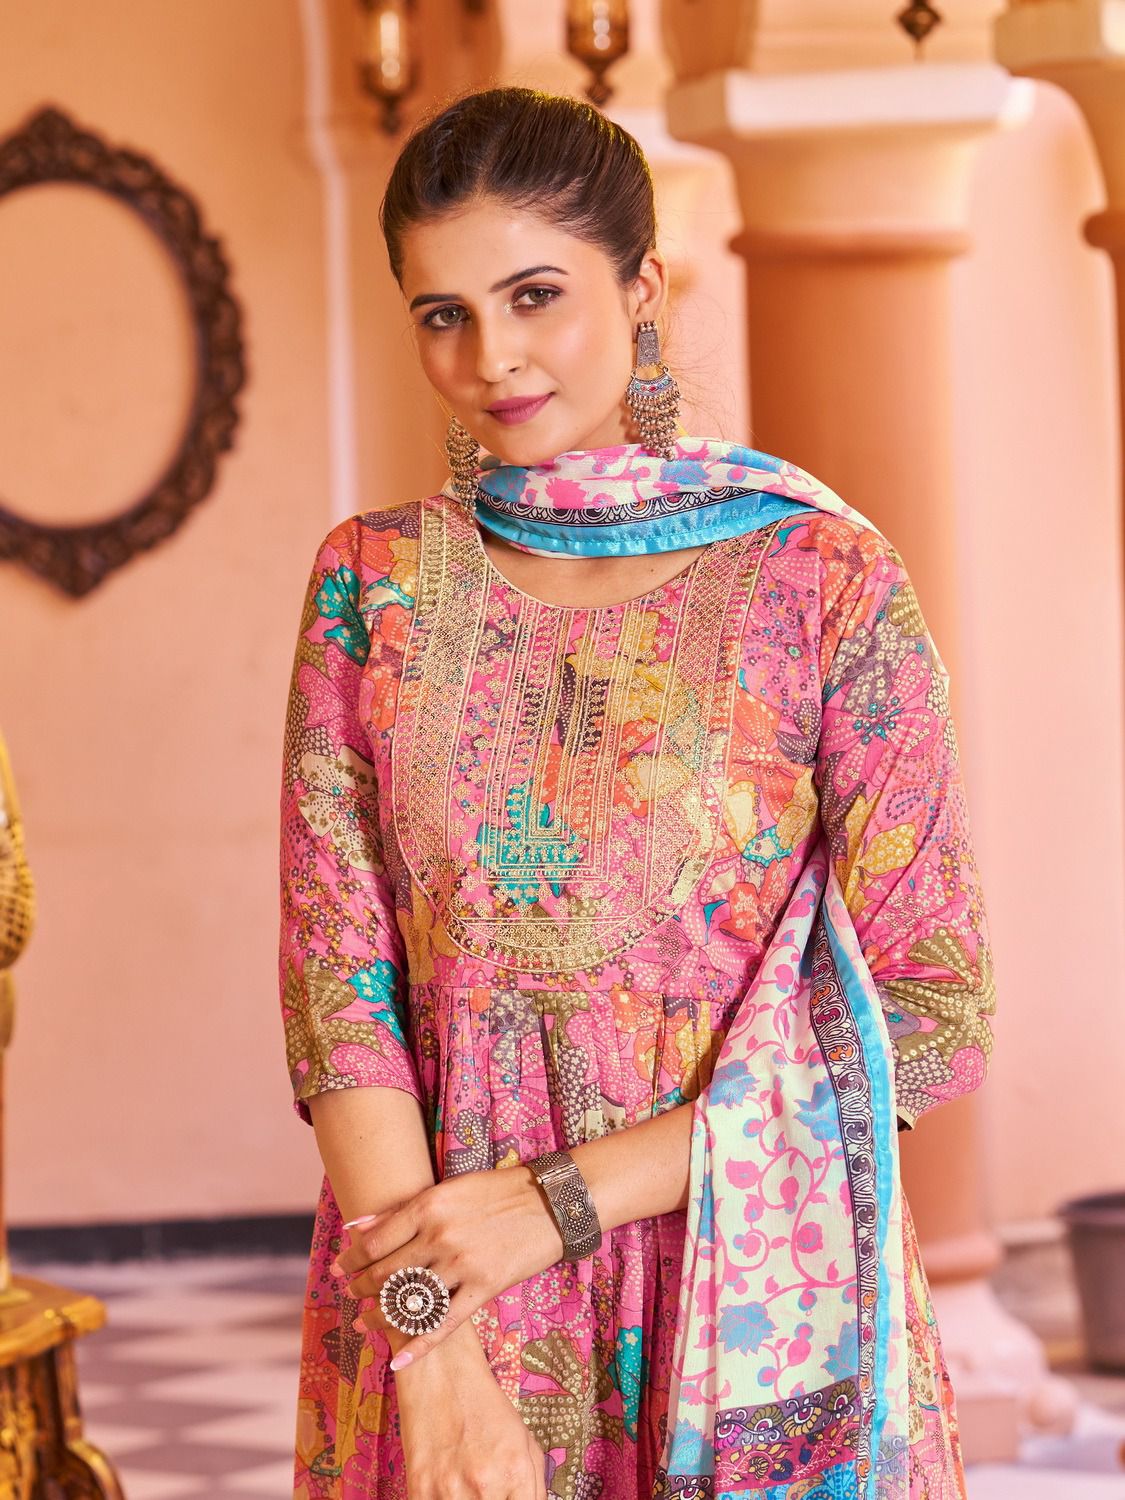 ankita fashion aneri mal cotton elegant look top bottom with dupatta catalog